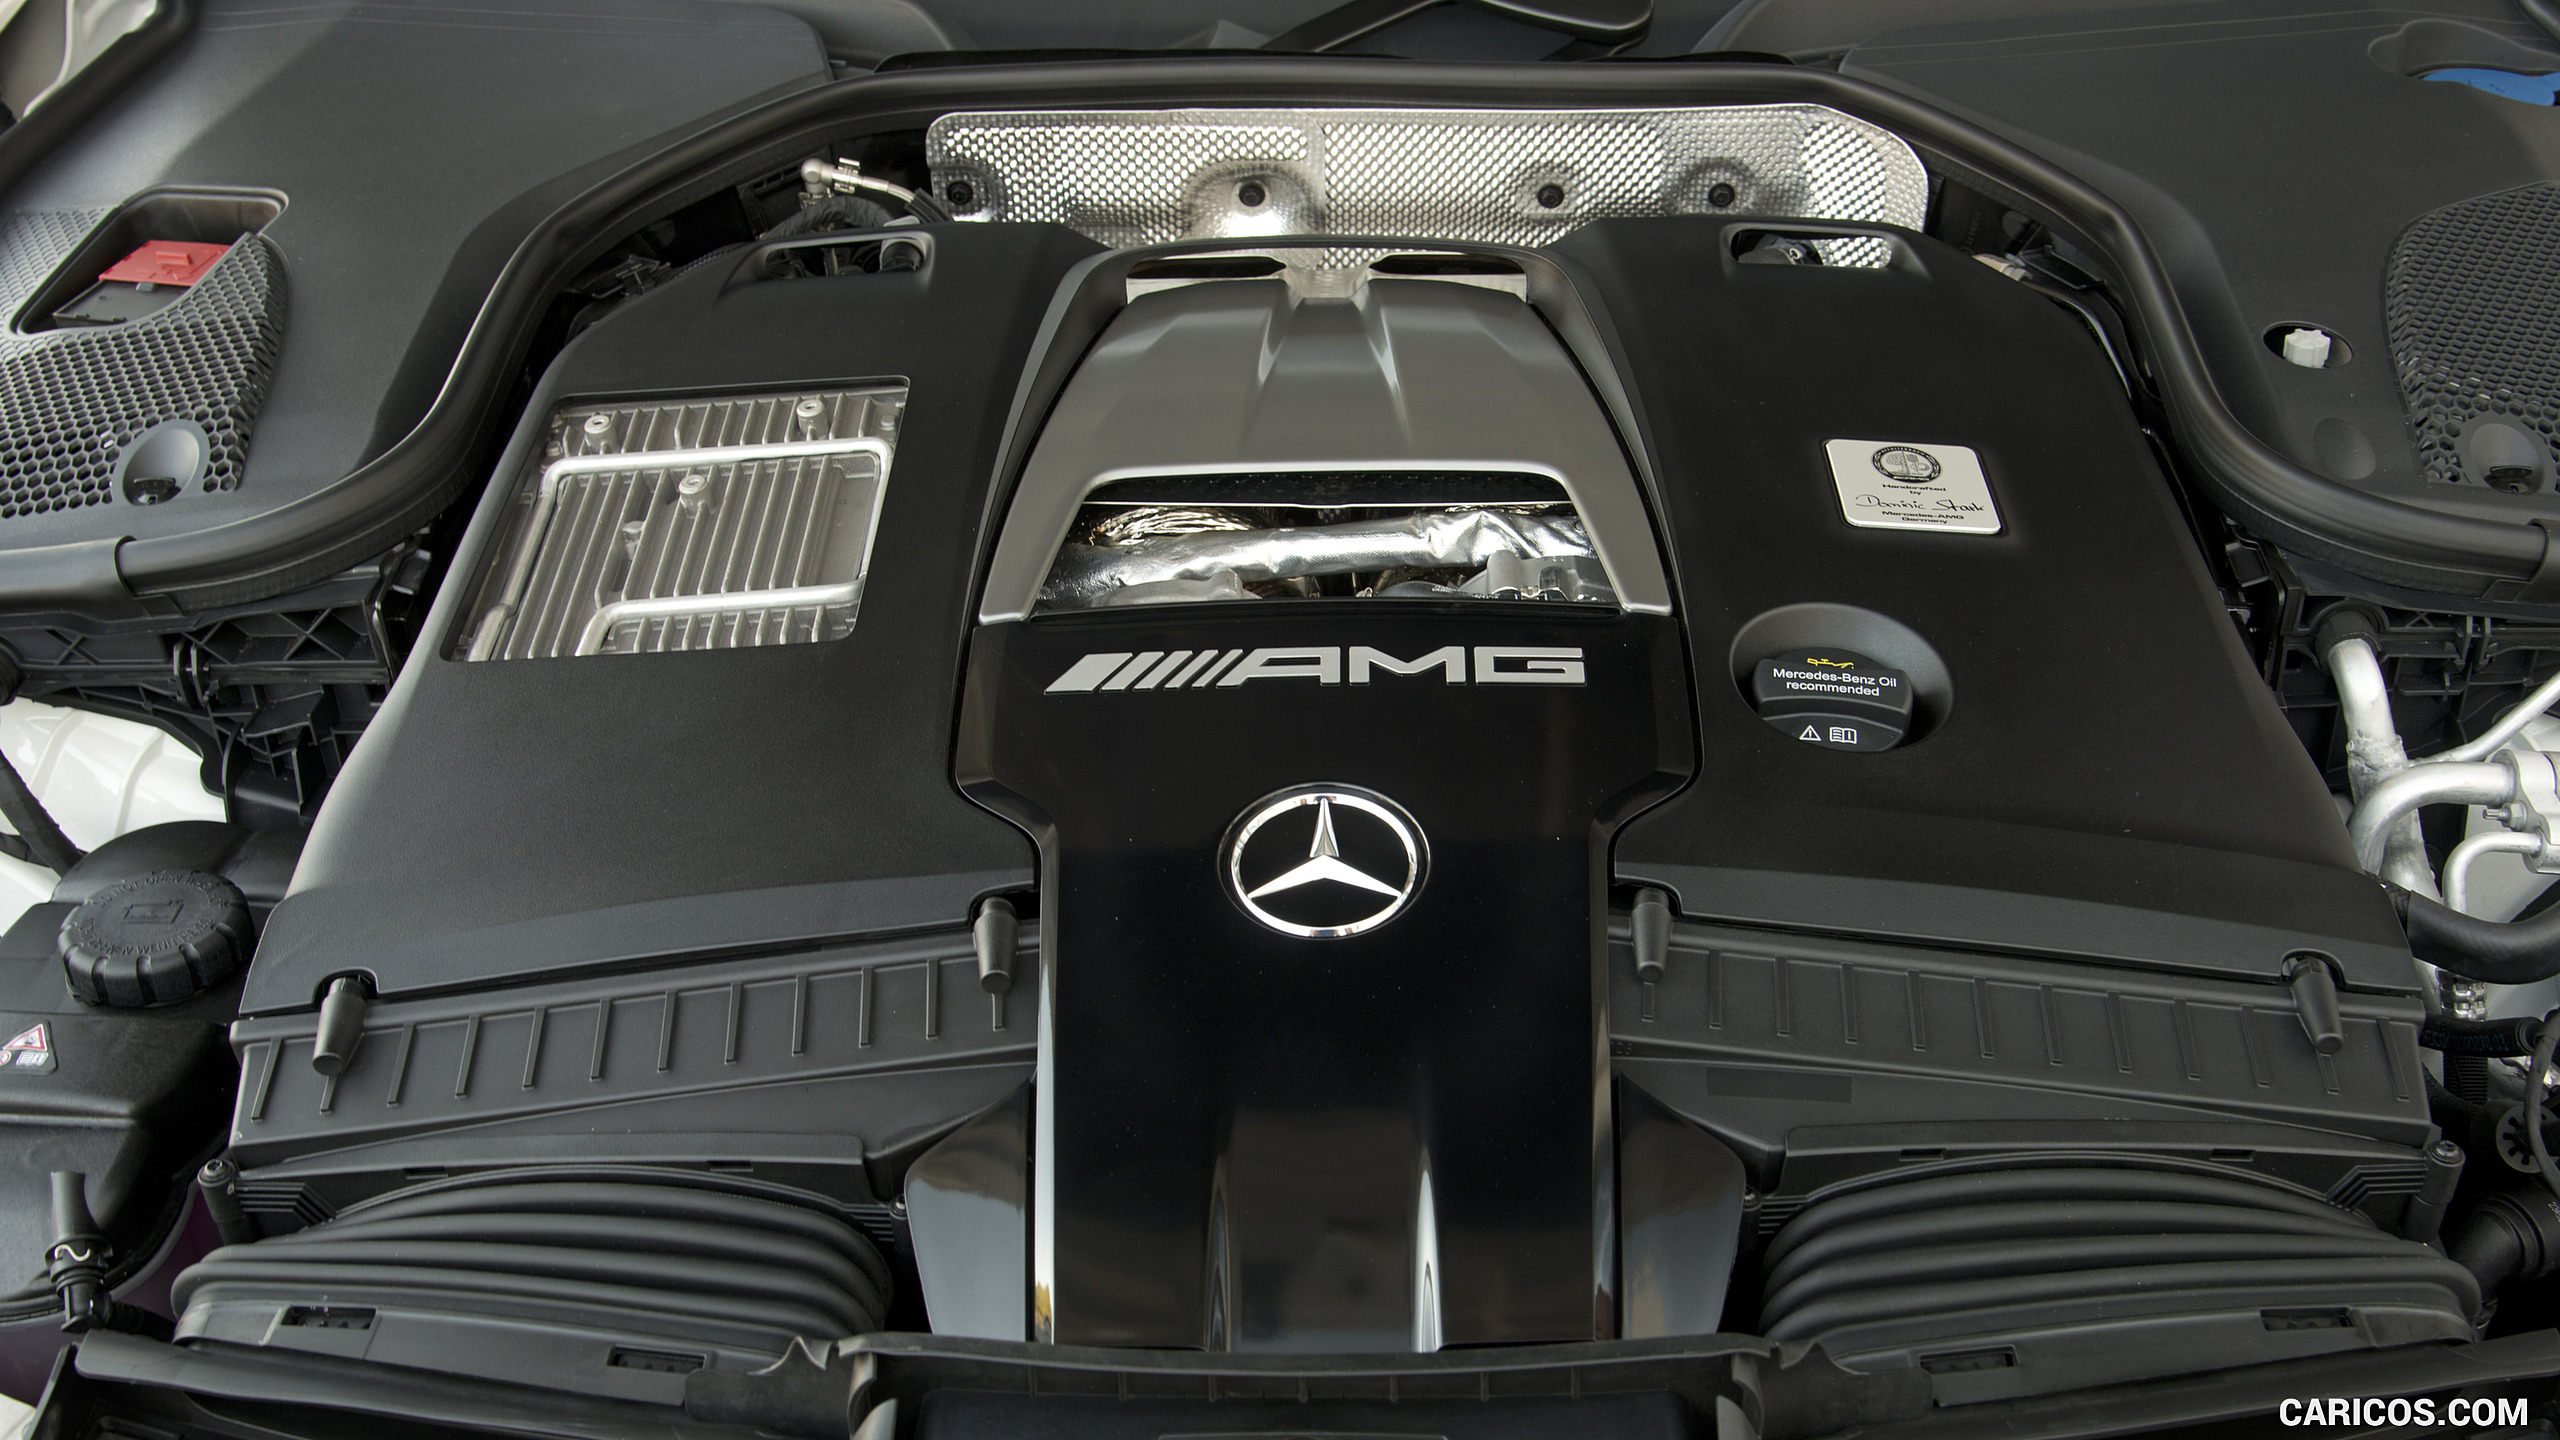 Mercedes Amg E63 S 4matic Engine Caricos